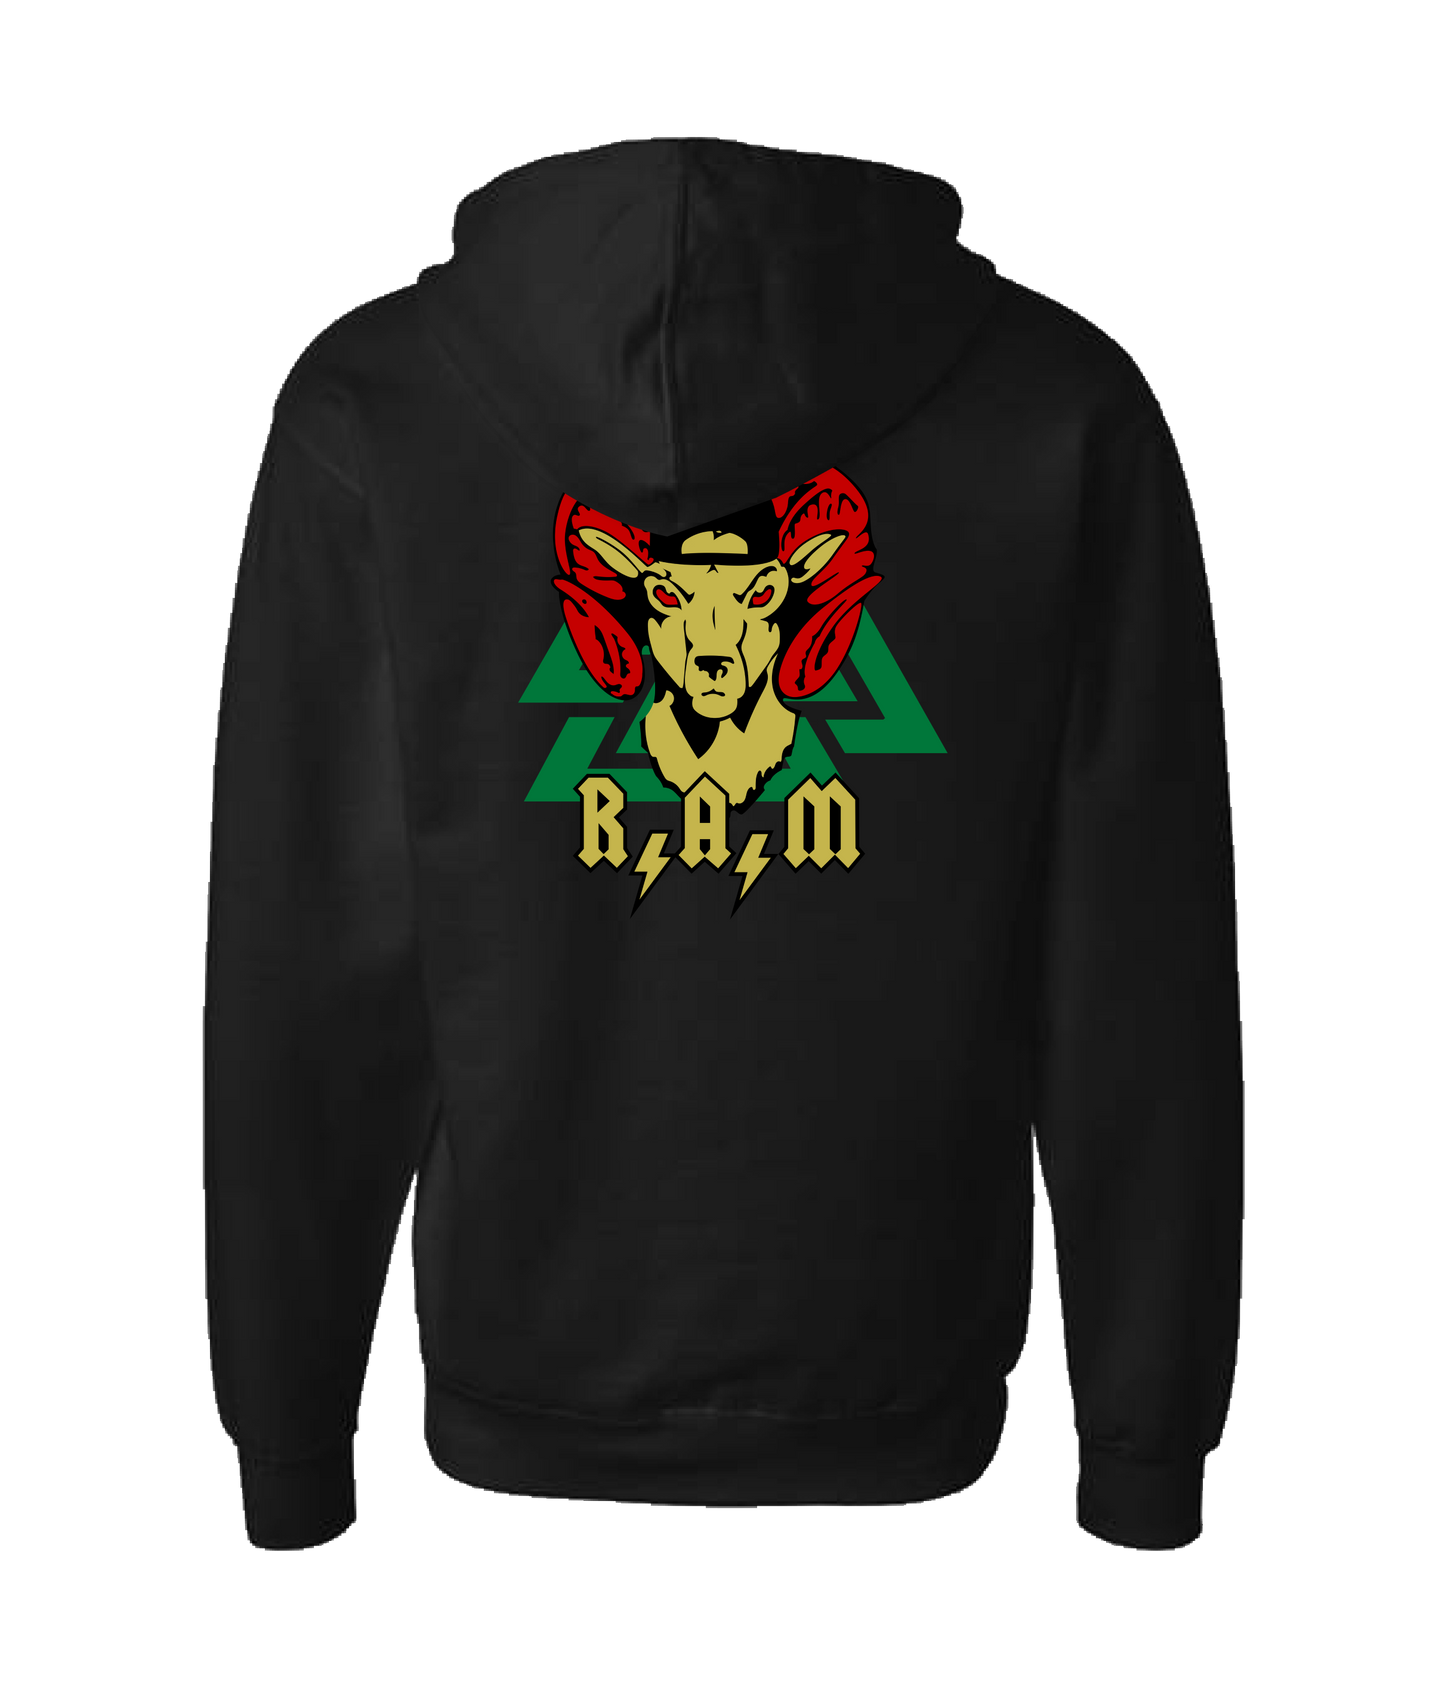 DJ R.A.M - Logo Green - Black Zip Up Hoodie